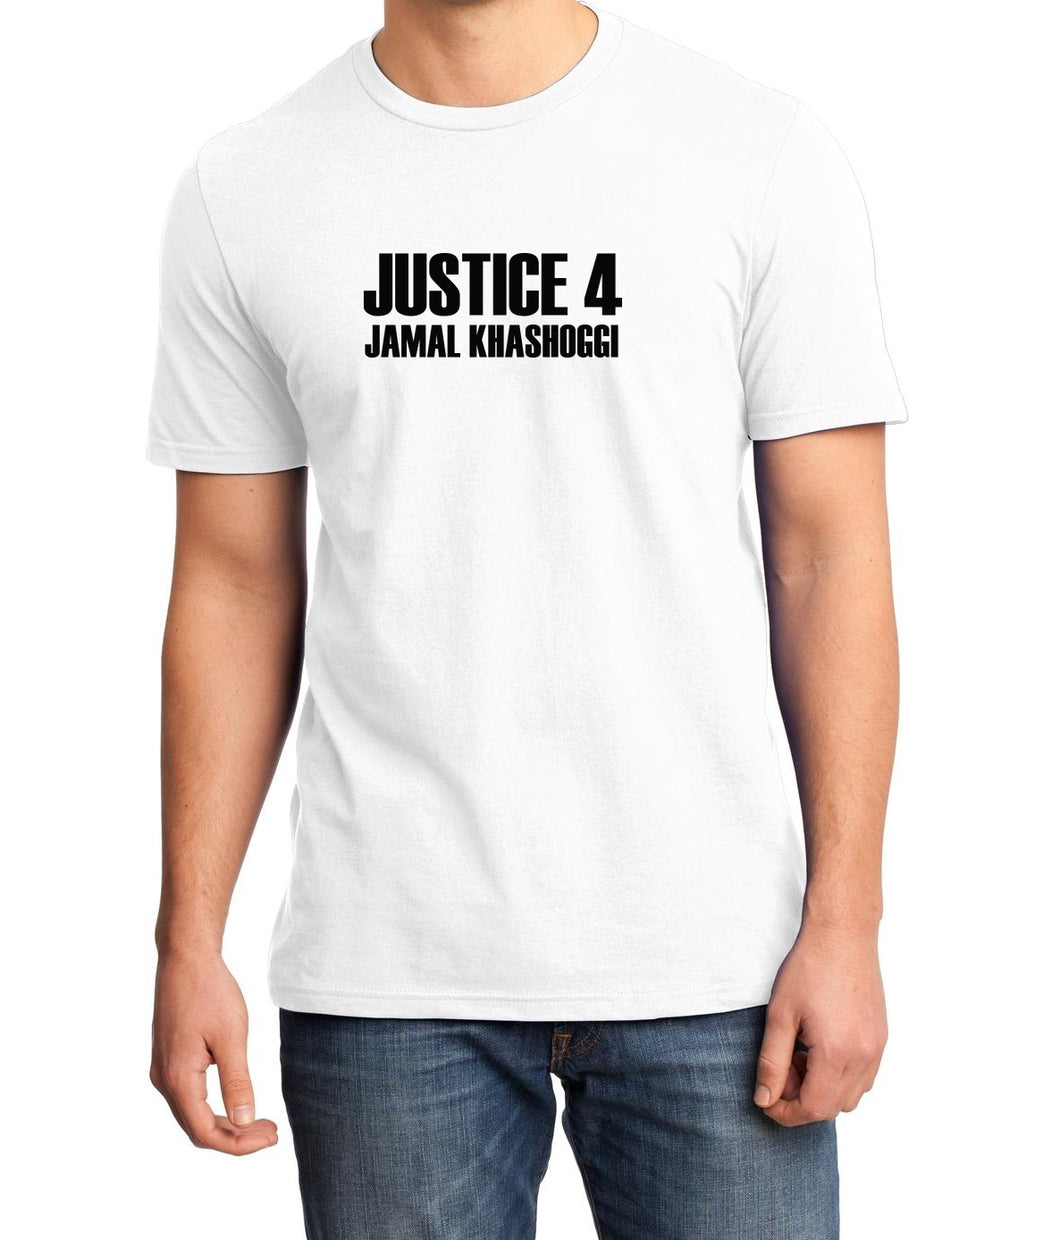 Justice 4 Jamal Khasoggi Unisex Quality Handmade T-Shirt.